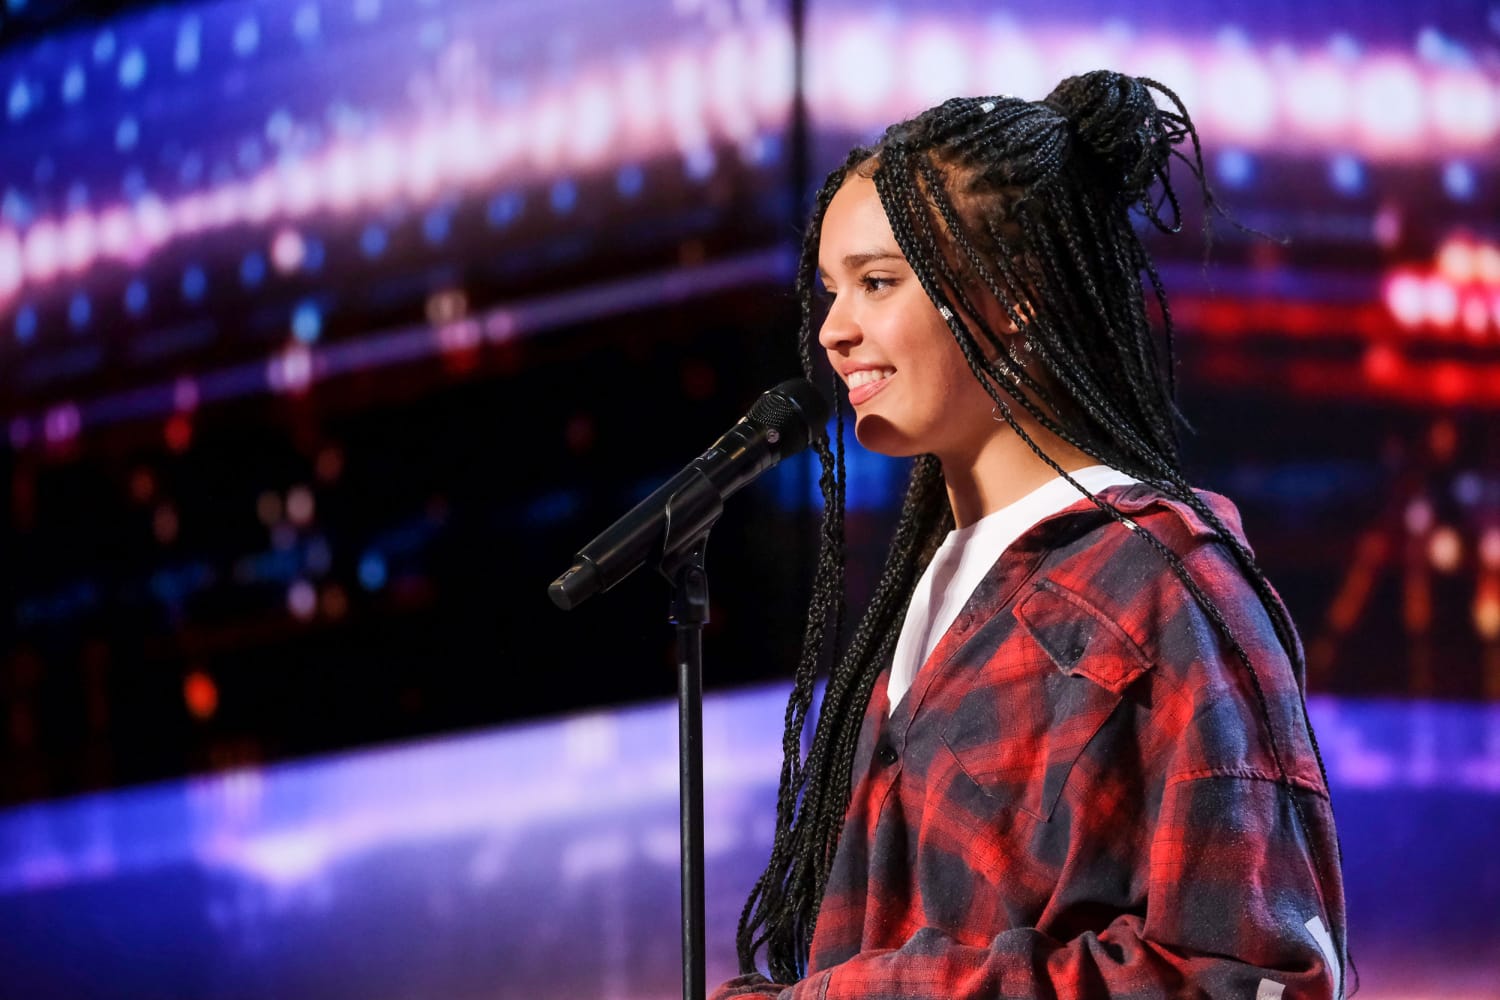 Forvirrede Erobring Opera Polish Singer Sara James Gets Golden Buzzer on 'America's Got Talent'